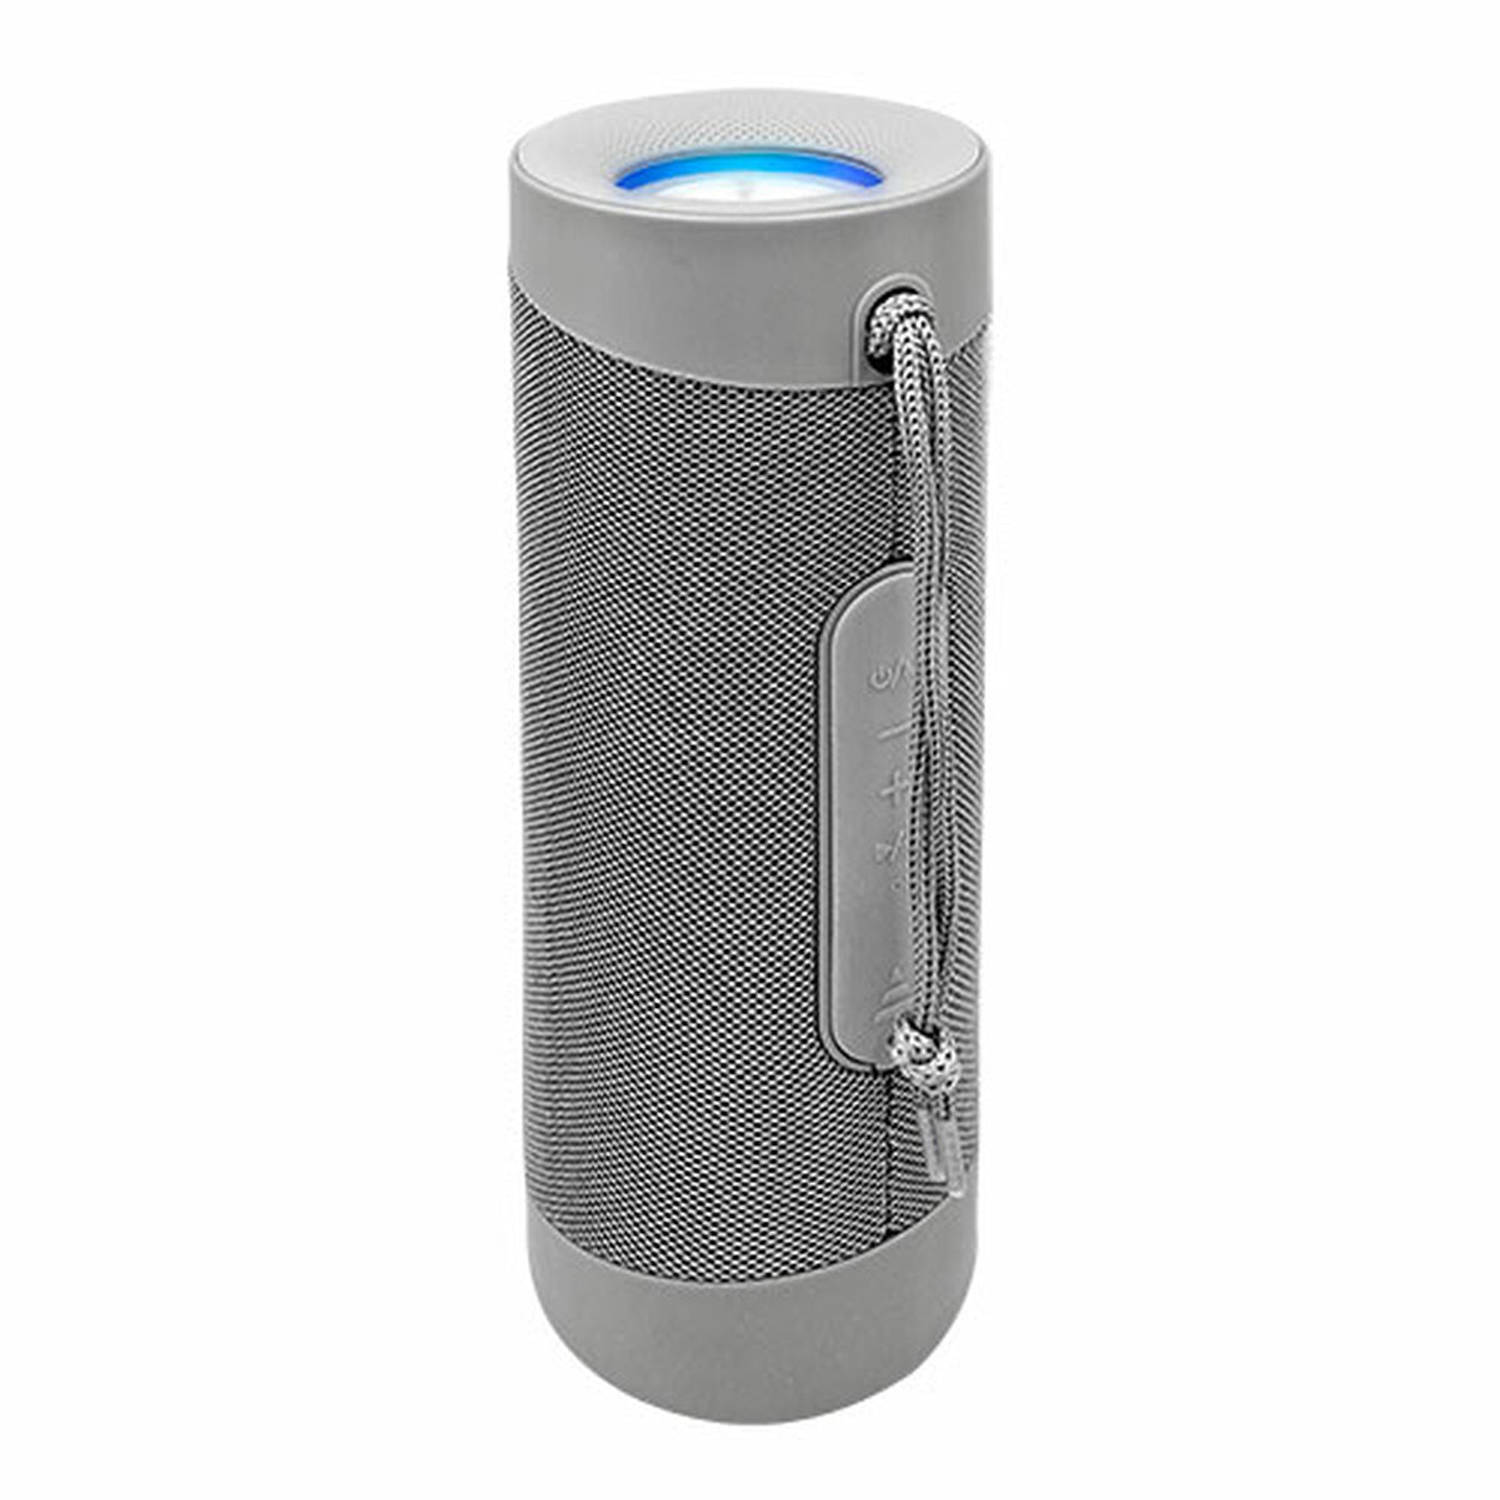 Denver BTV-208 - Bluetooth speaker - portable - LED licht - USB input - SD kaart input - Handsfree functie - Grijs